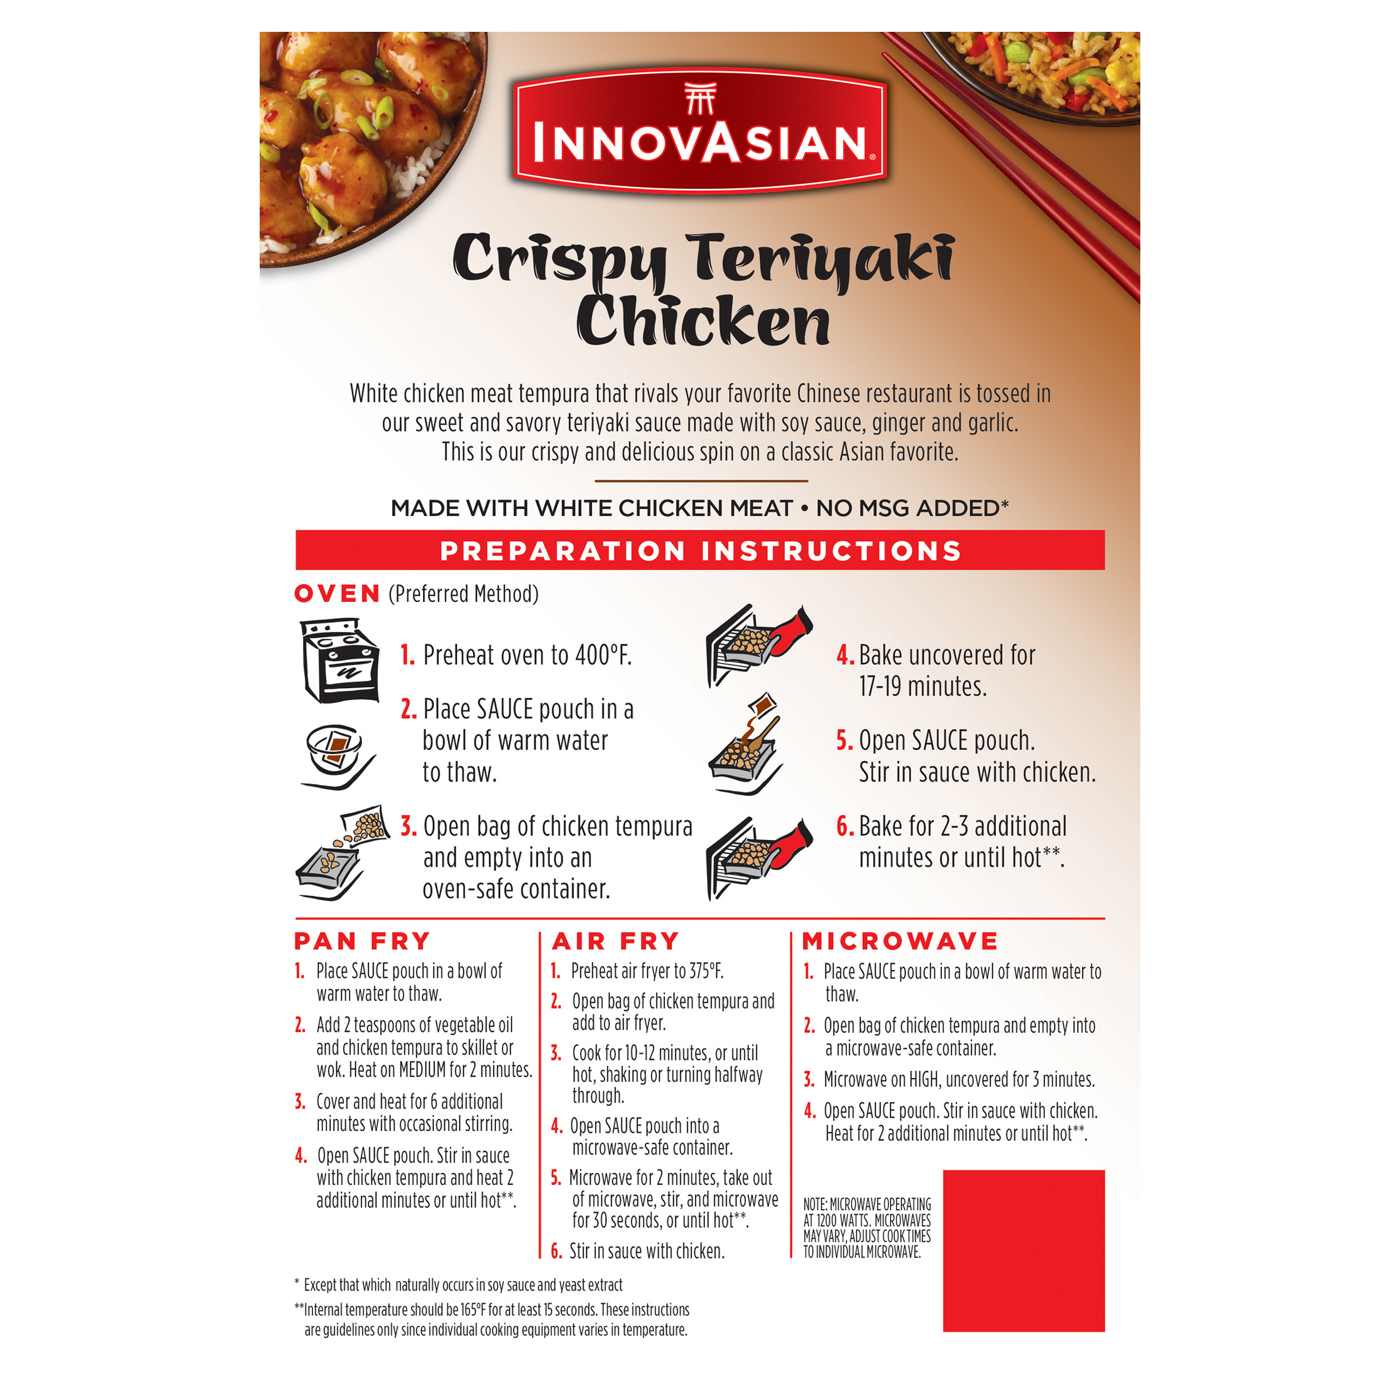 InnovAsian Frozen Crispy Teriyaki Chicken; image 7 of 7